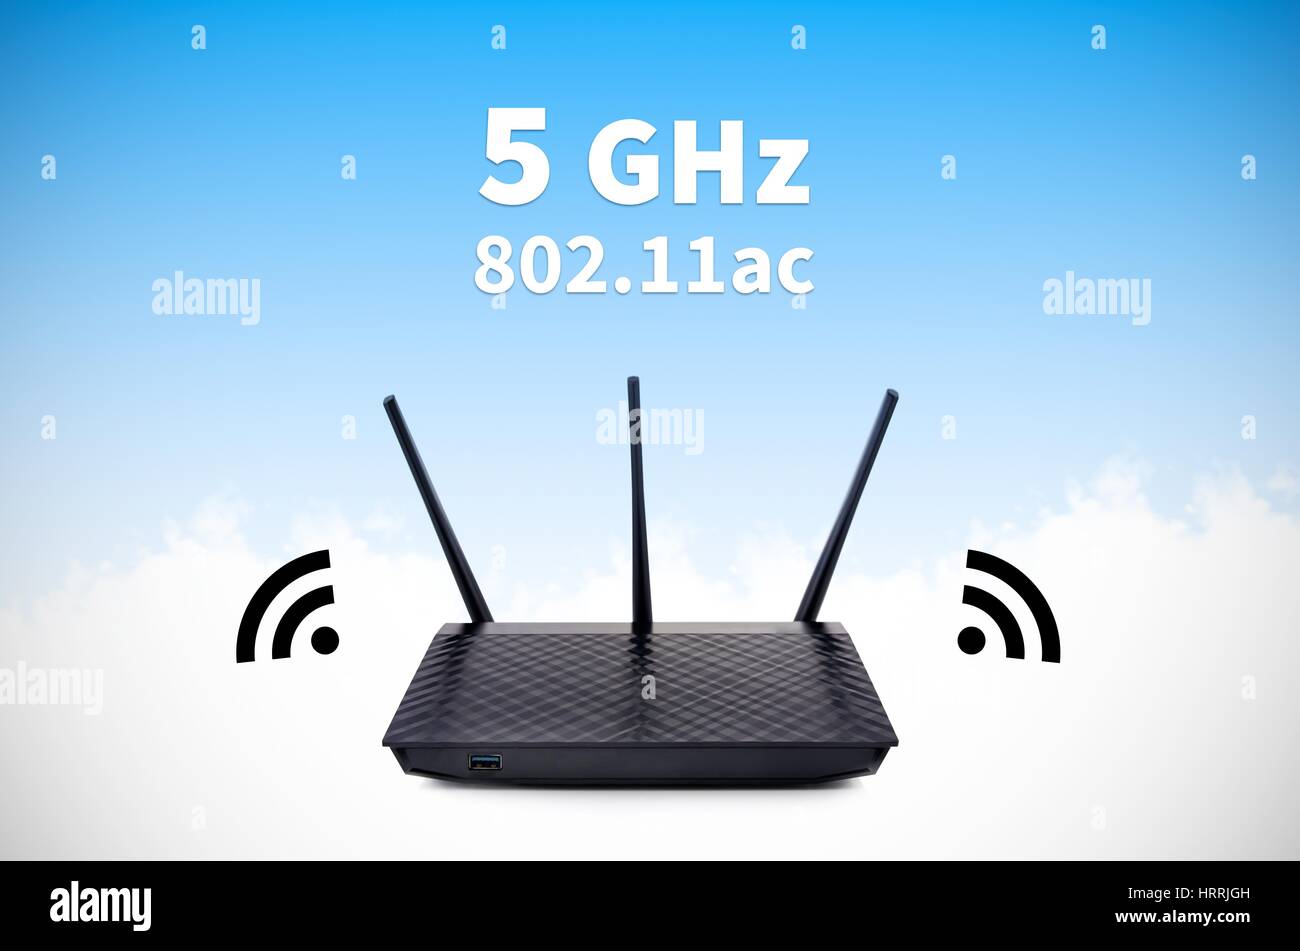 https://c8.alamy.com/comp/HRRJGH/modern-wireless-wi-fi-router-with-5ghz-and-80211ac-high-speed-standards-HRRJGH.jpg